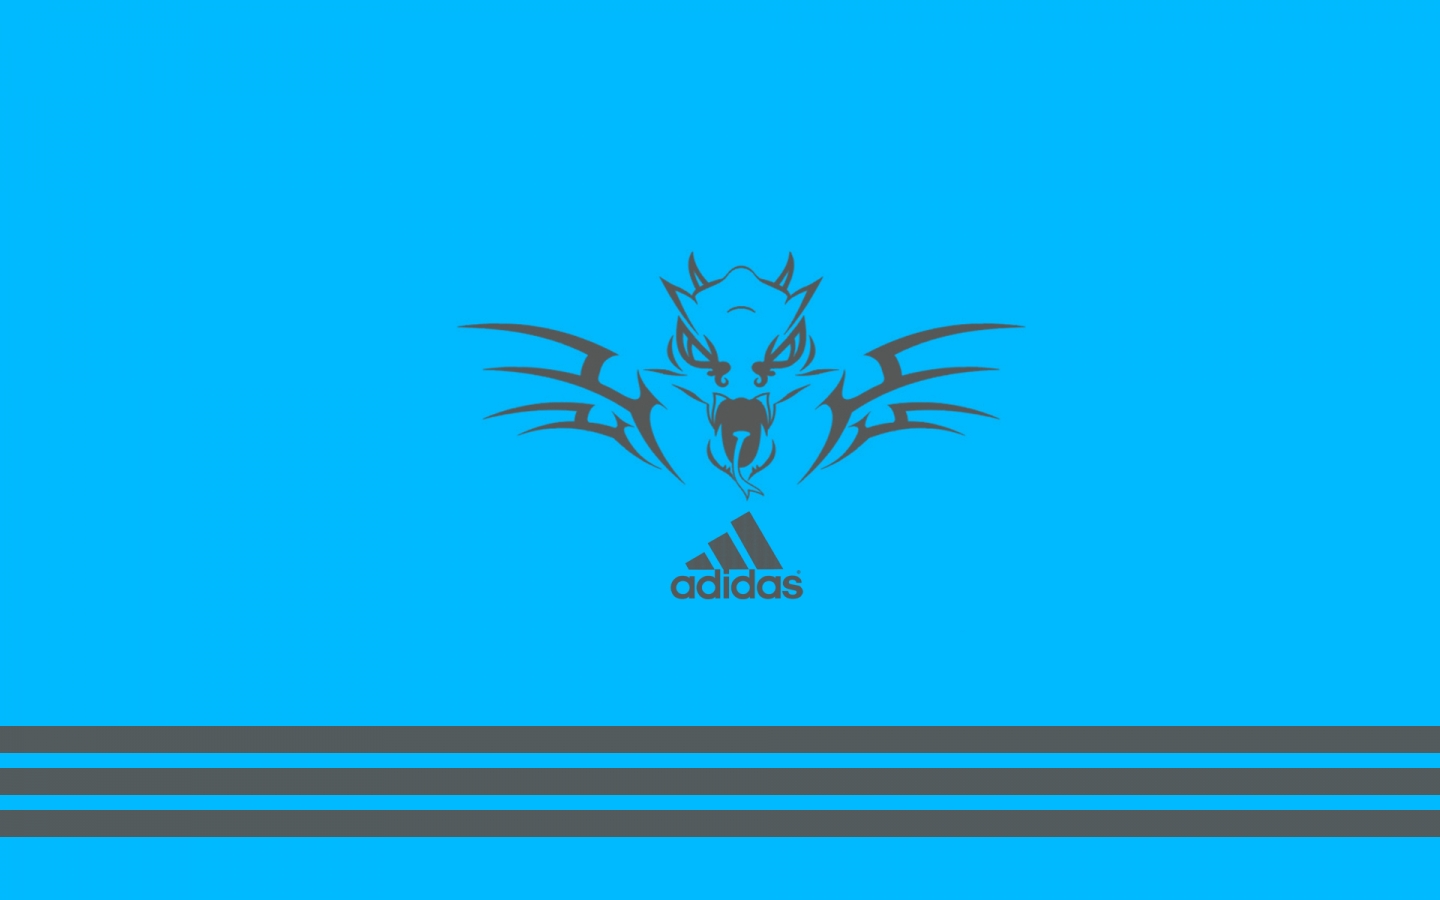 Adidas Fantasy Logo for 1440 x 900 widescreen resolution